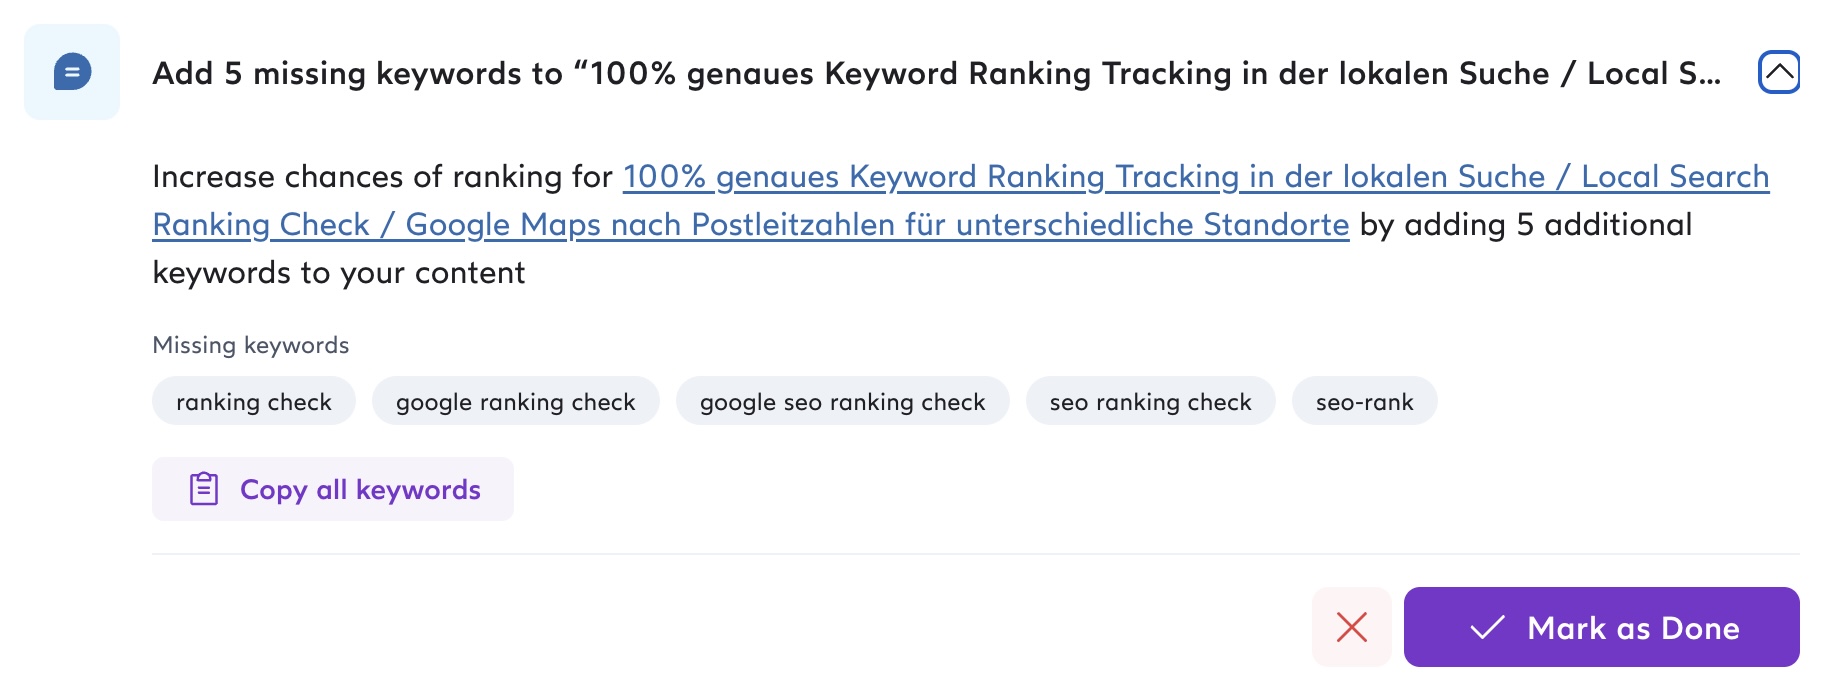 Add 5 missing keywords to "100% genaues Keyword Ranking Tracking in der lokalen Suche